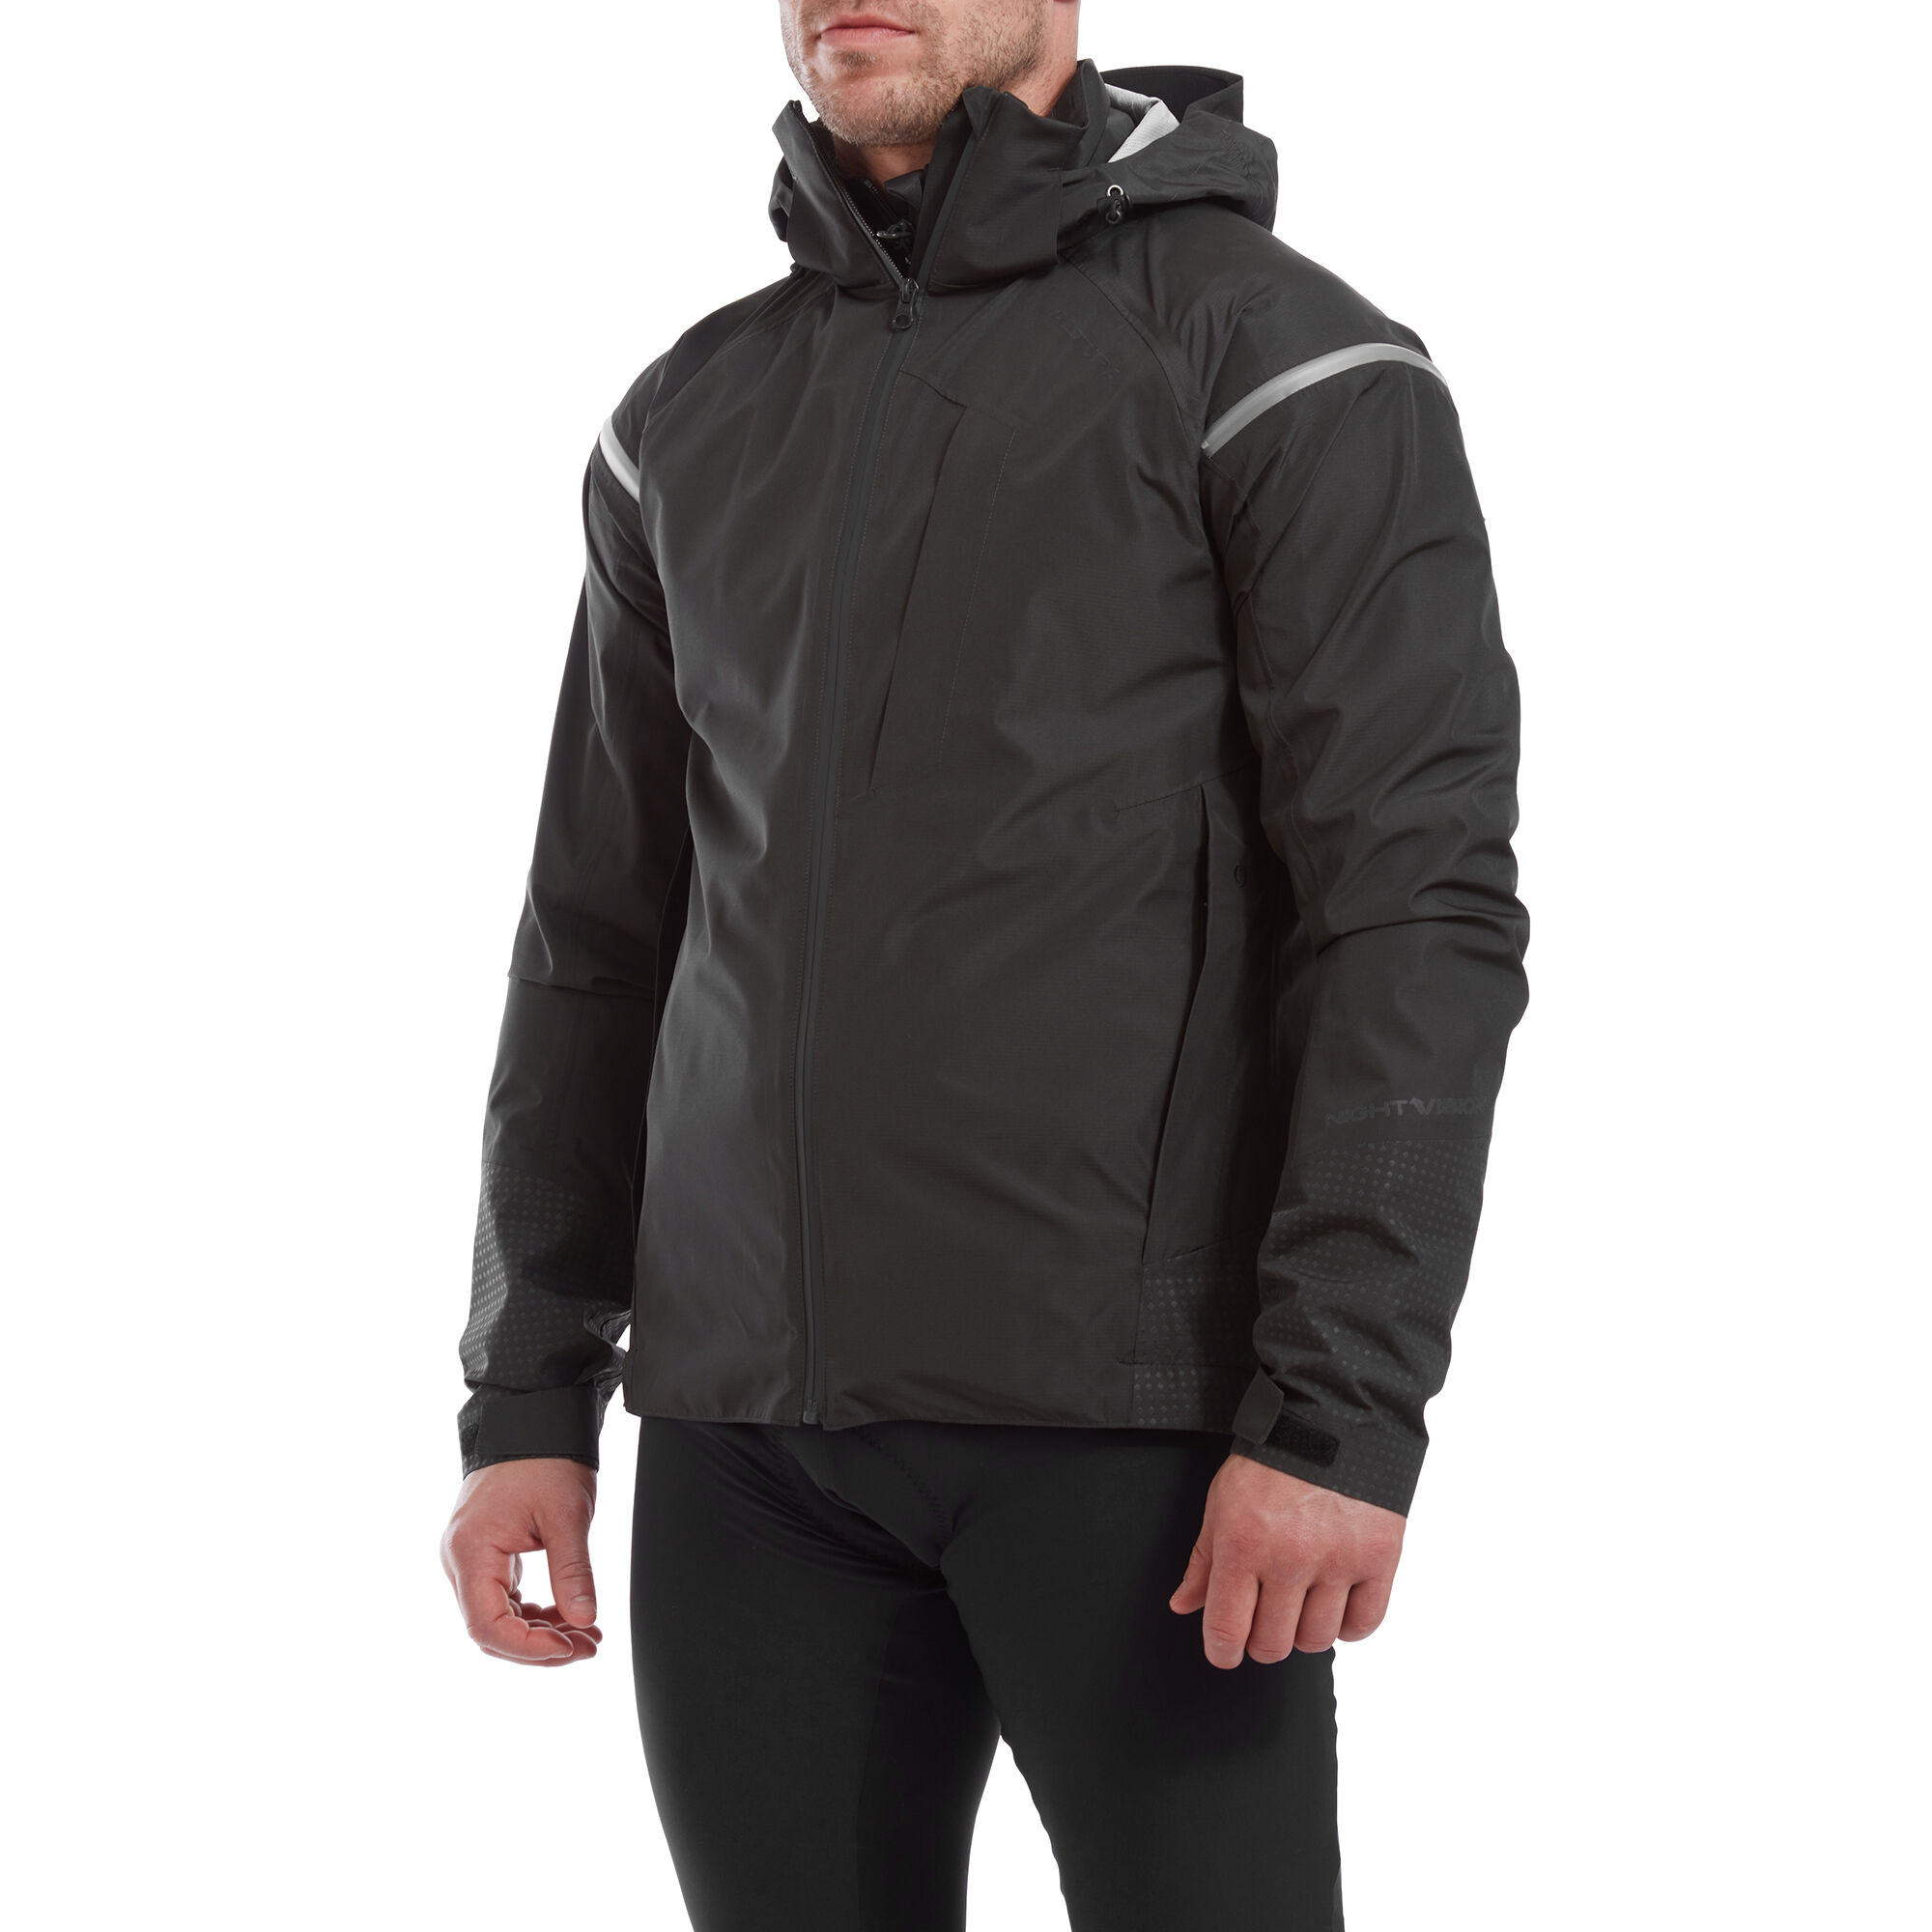 Altura Nightvision Electron - Waterproof jacket - Men's